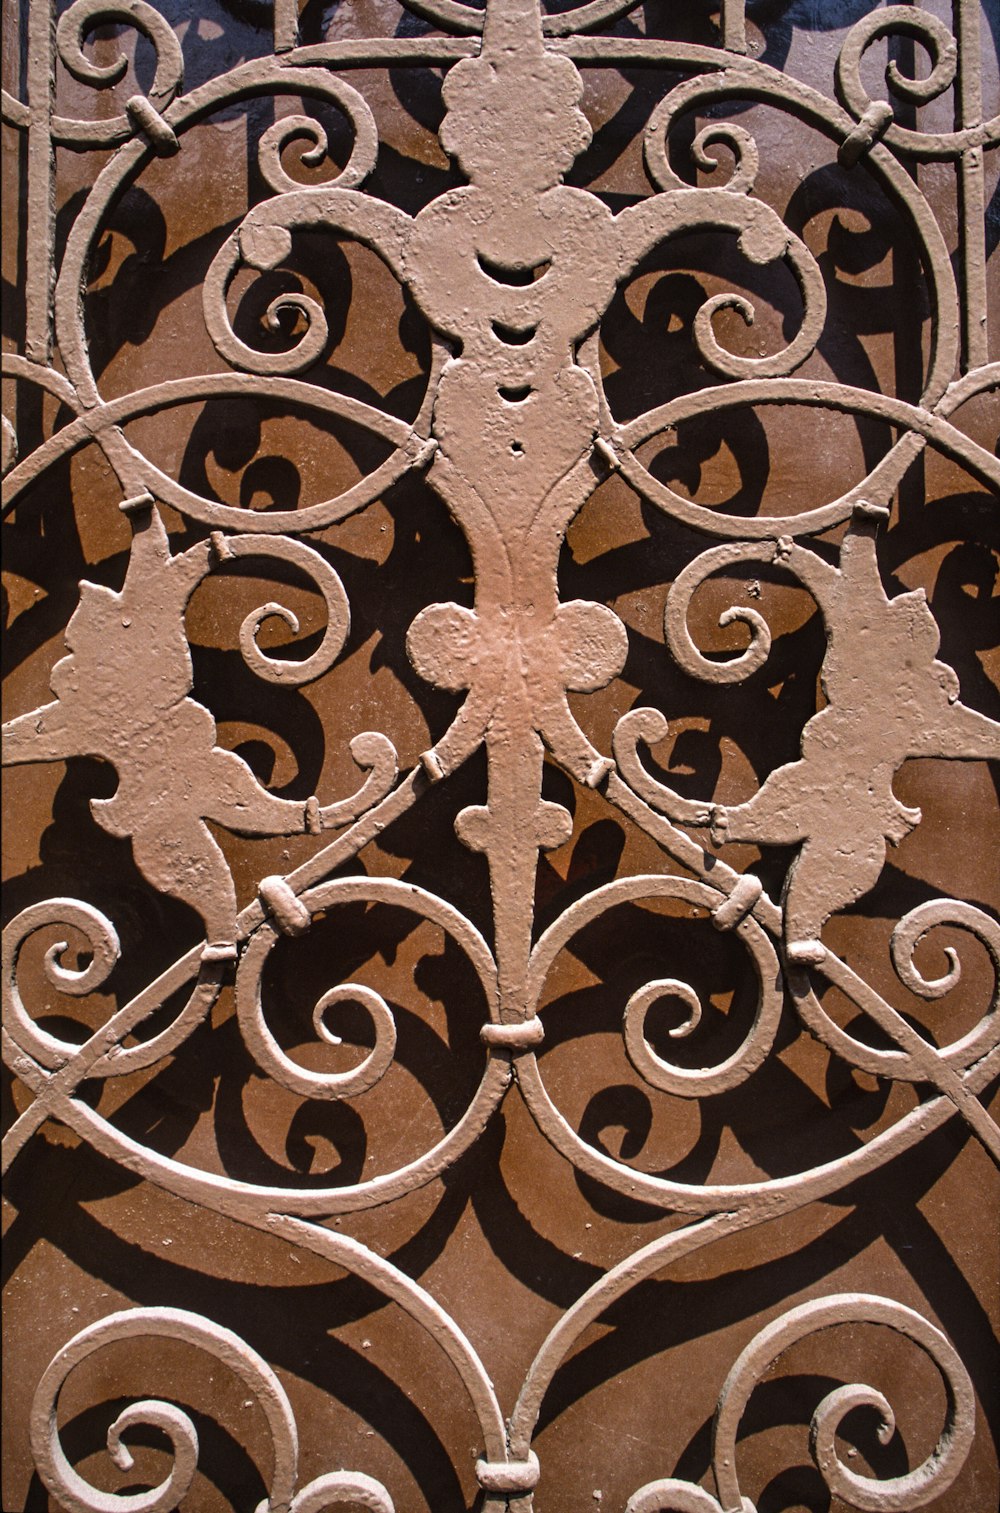 a close up of a decorative iron work